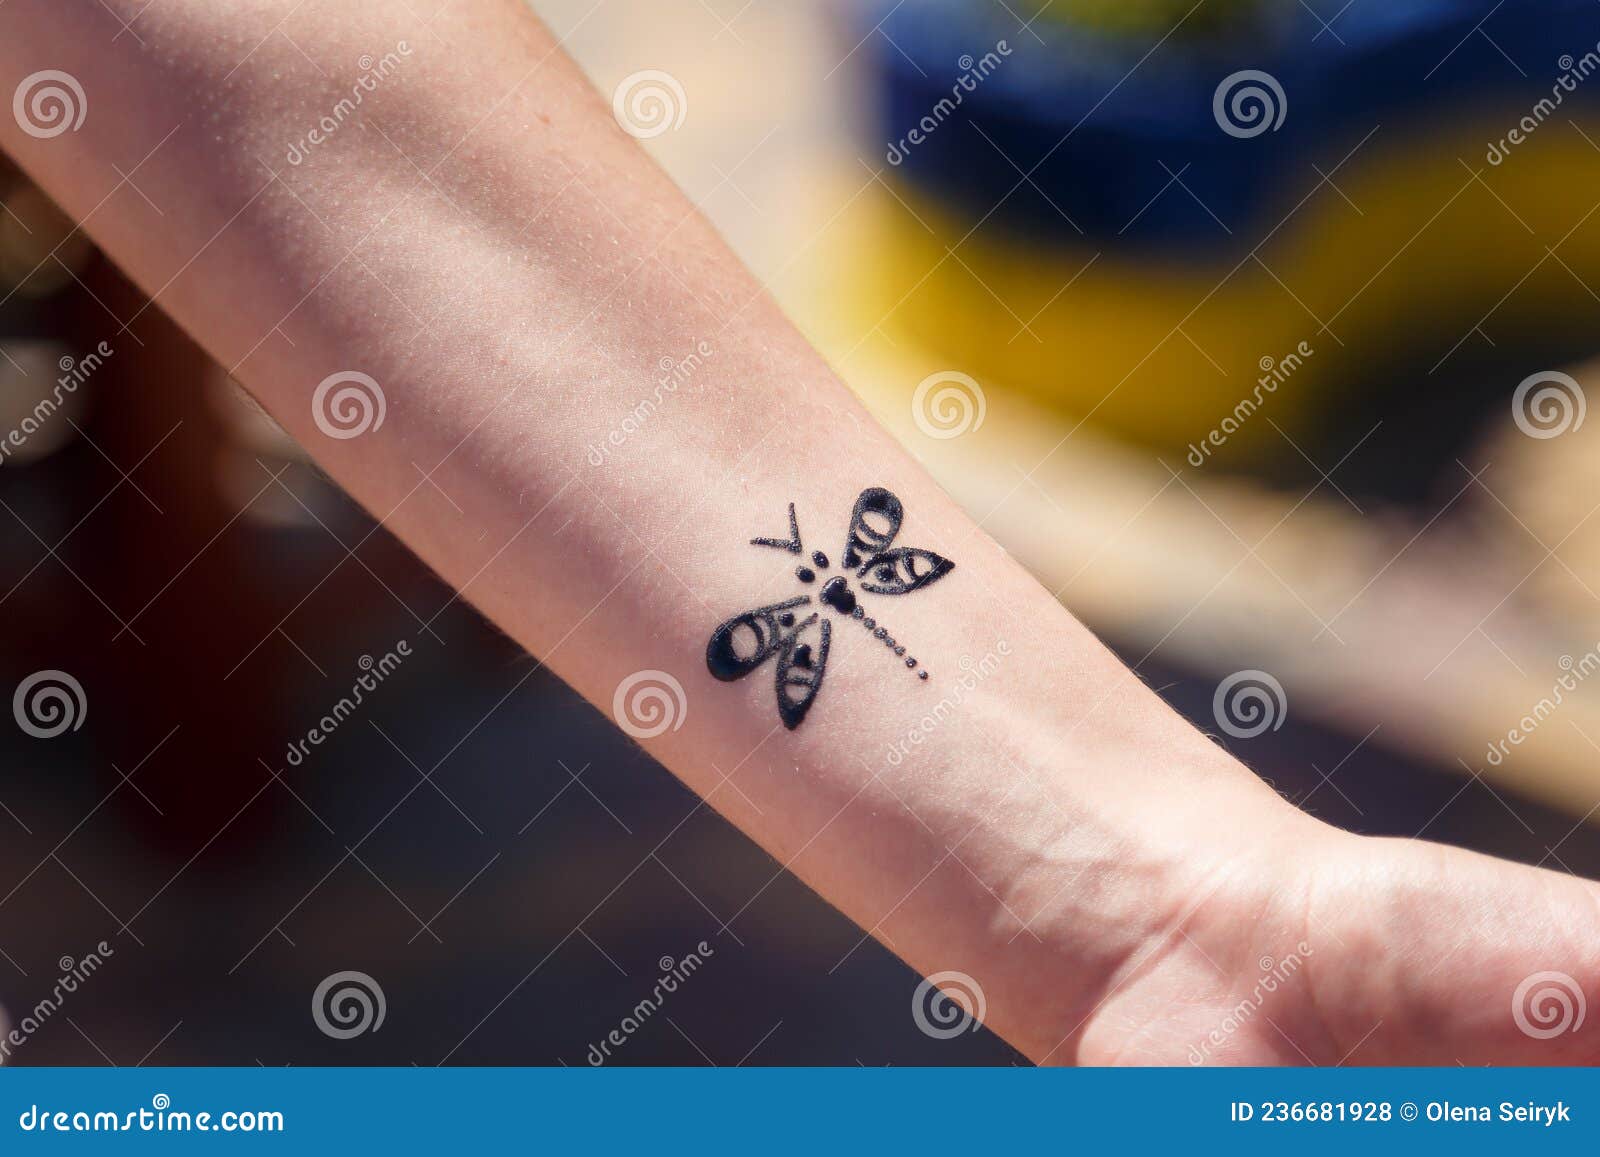 Explore the 7 Best dragonfly Tattoo Ideas (2019) • Tattoodo